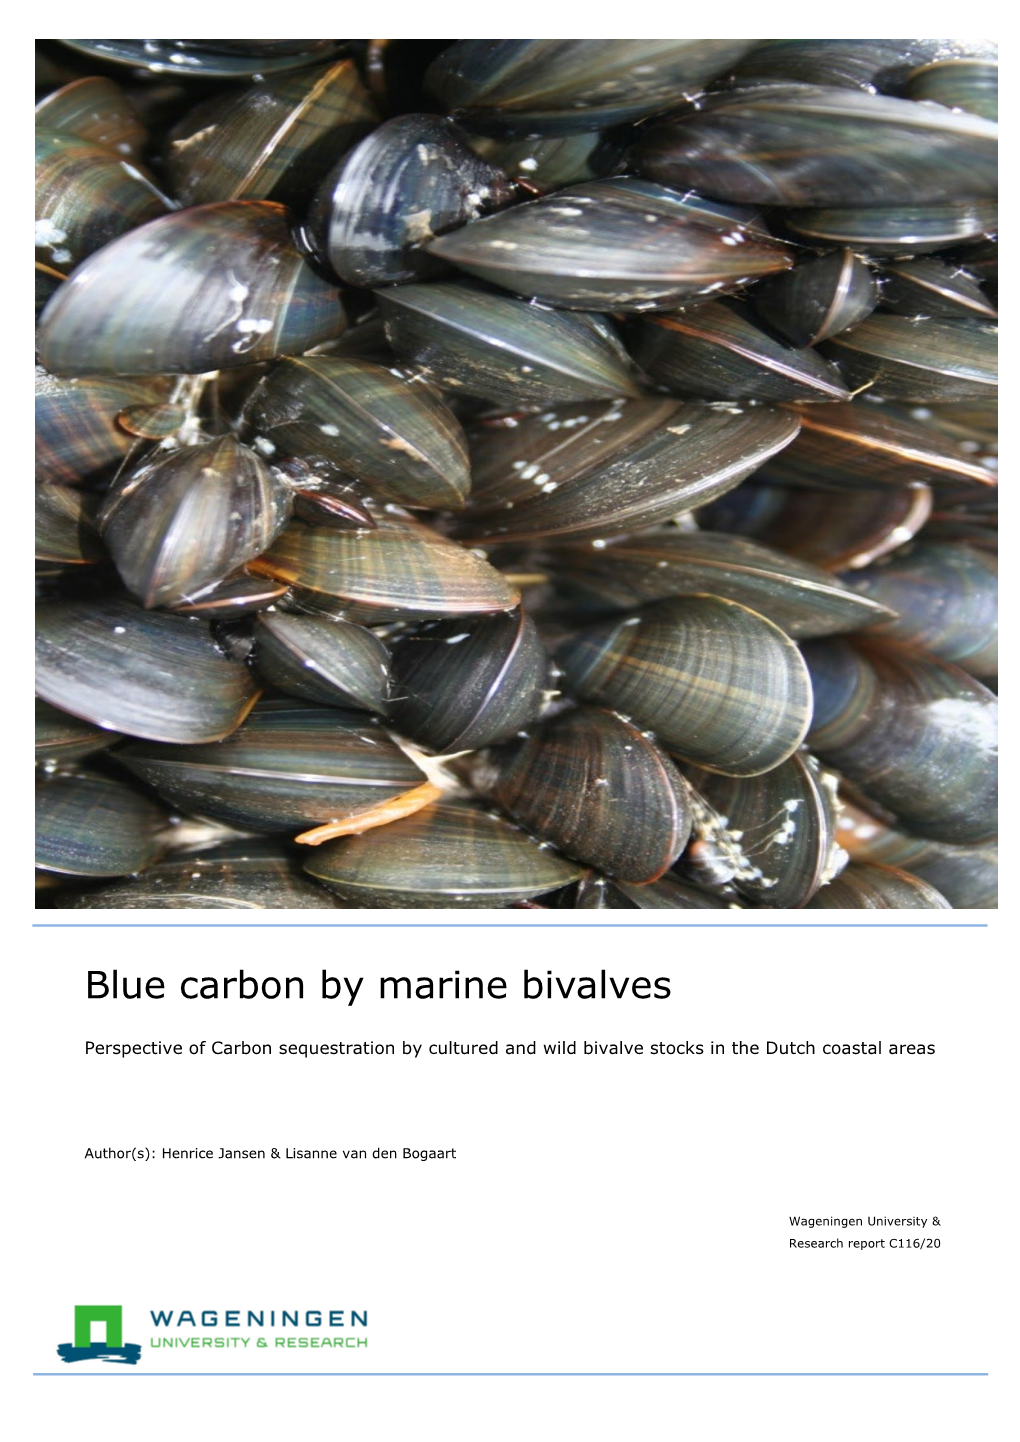 Blue Carbon by Marine Bivalves